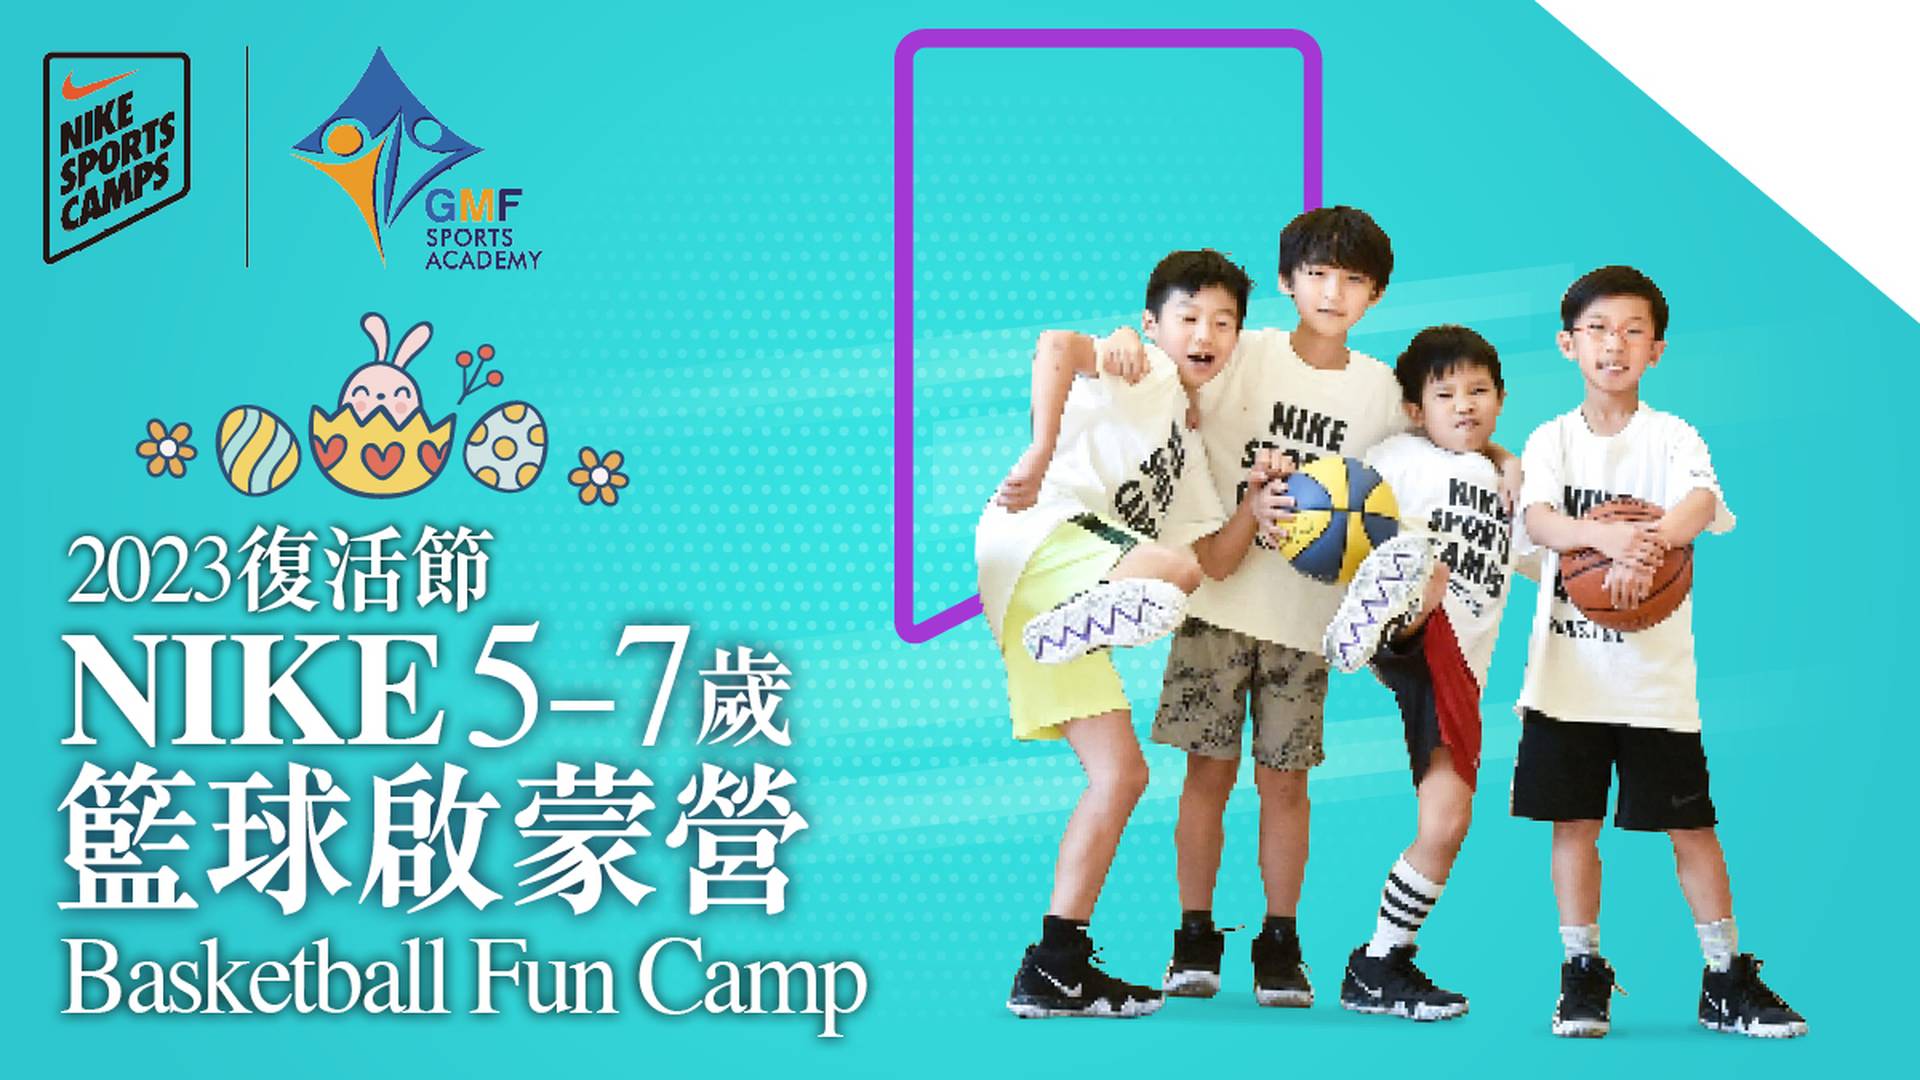 Nike Basketball Fun Camp 復活節NIKE籃球啟蒙營 2023 (5 - 7 歲) 